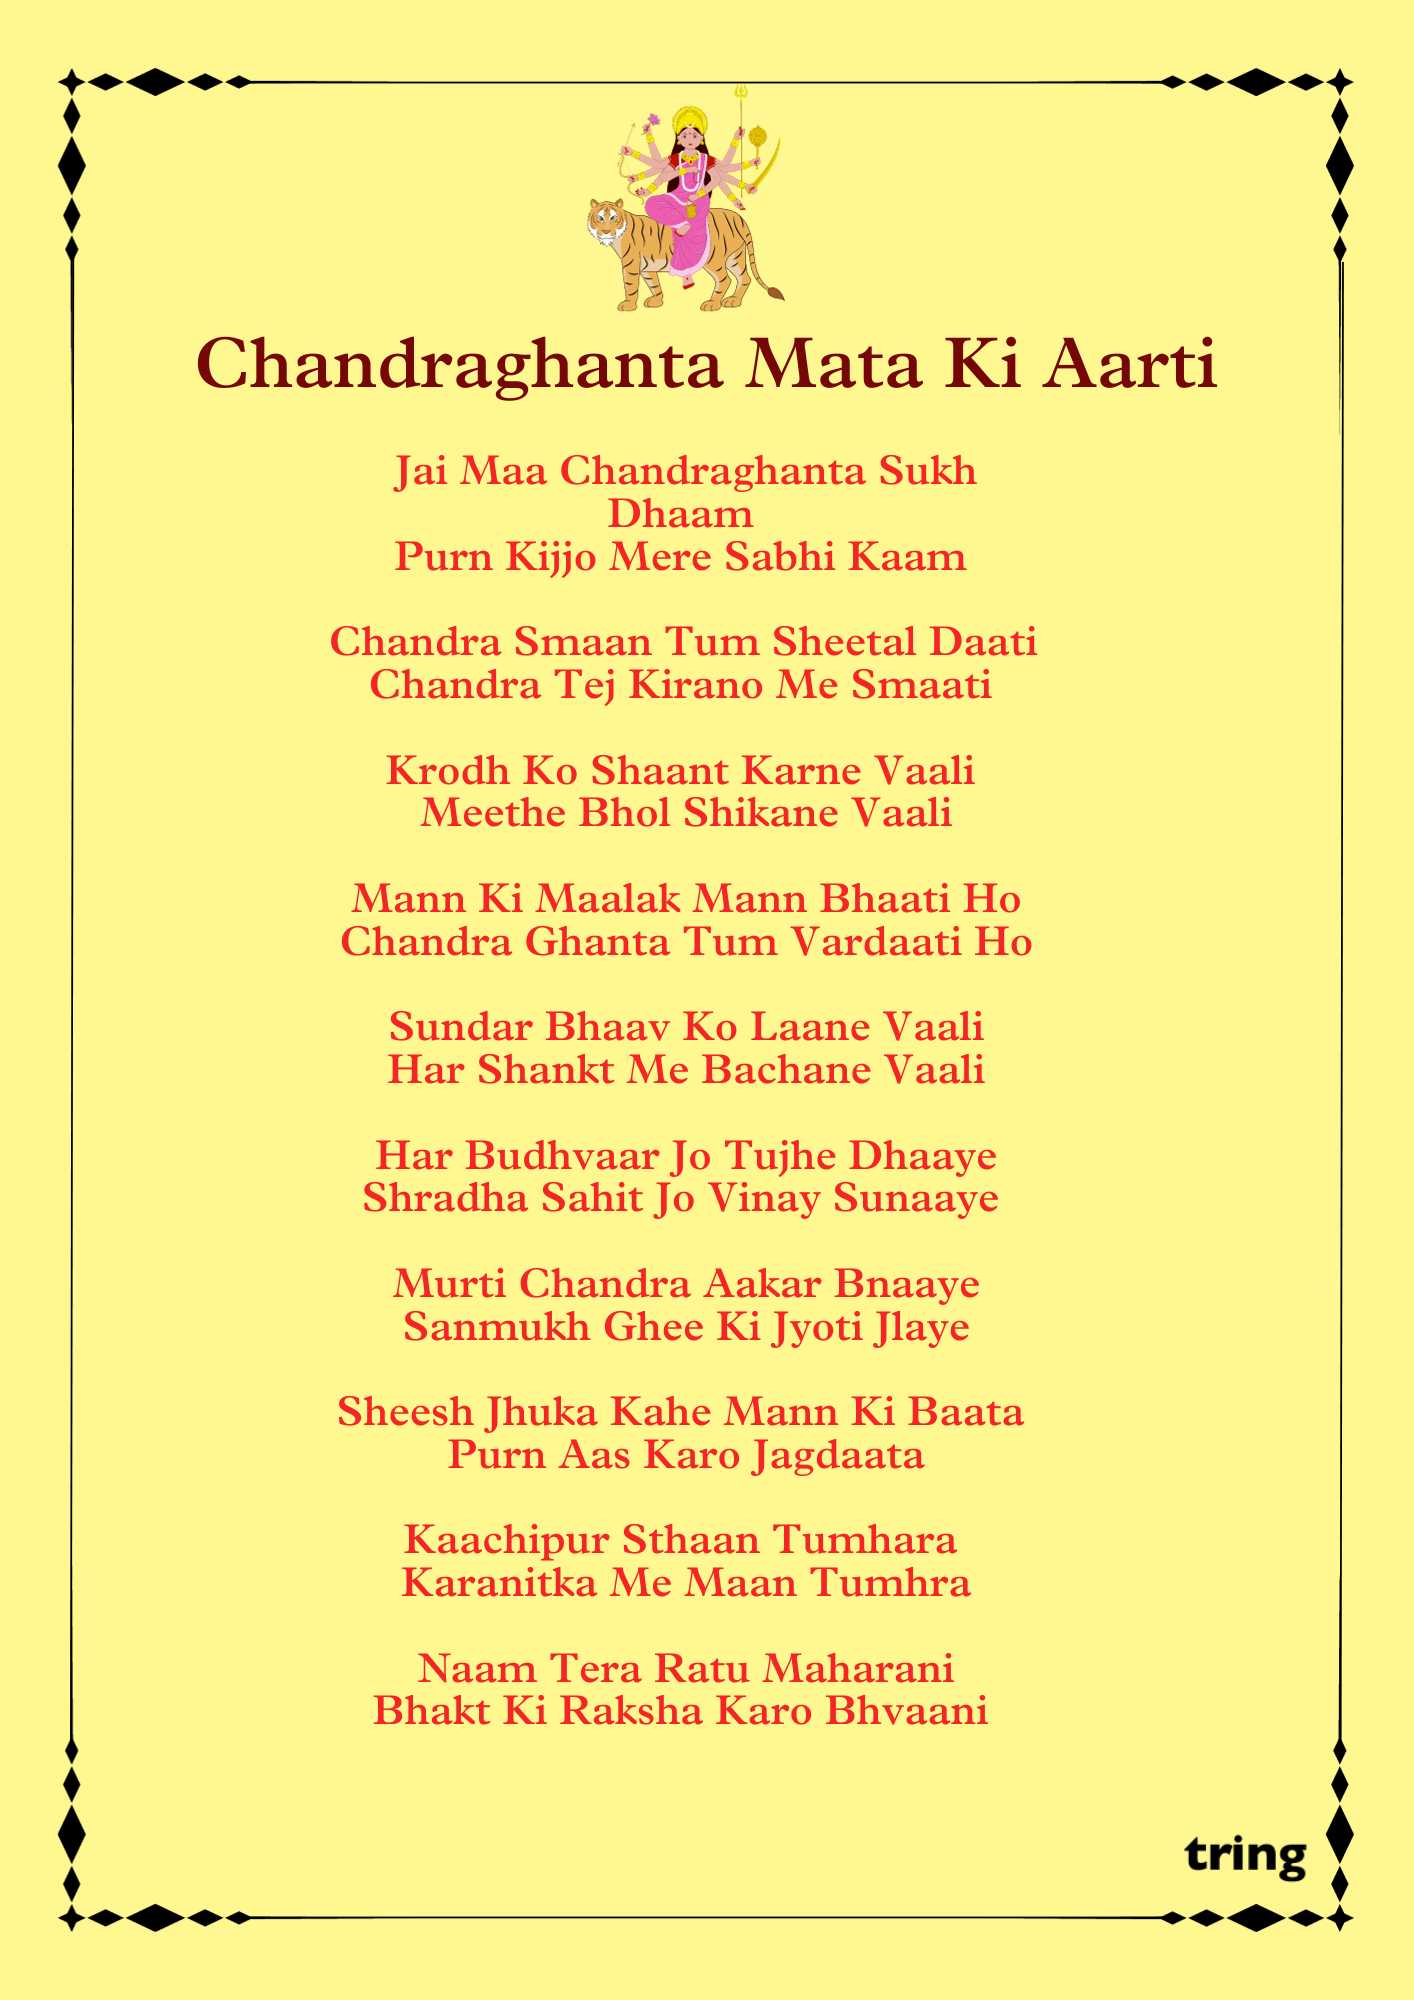 Chandraghanta Mata Aarti Images (1)